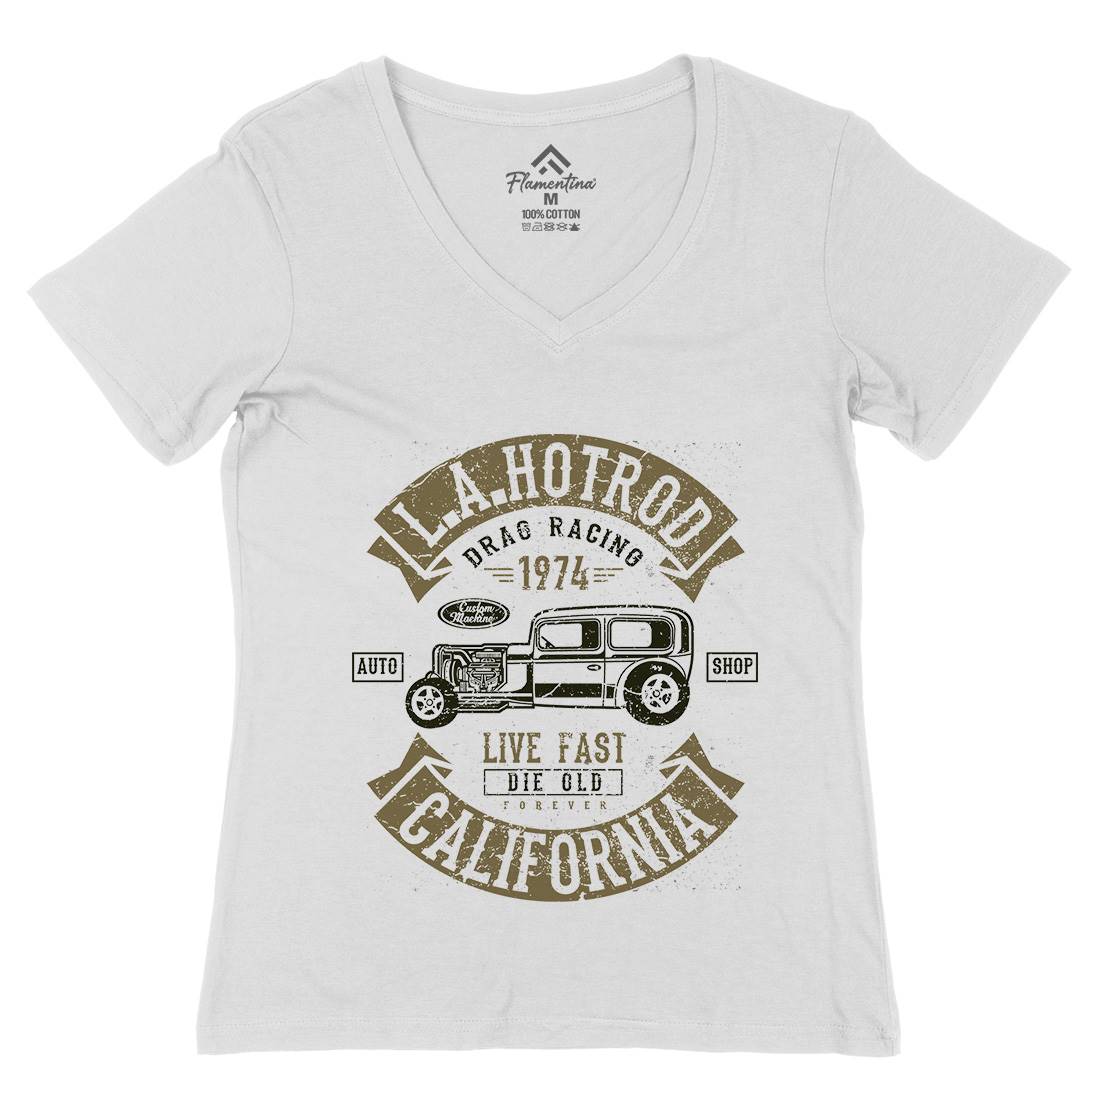 La Hotrod Womens Organic V-Neck T-Shirt Cars A080